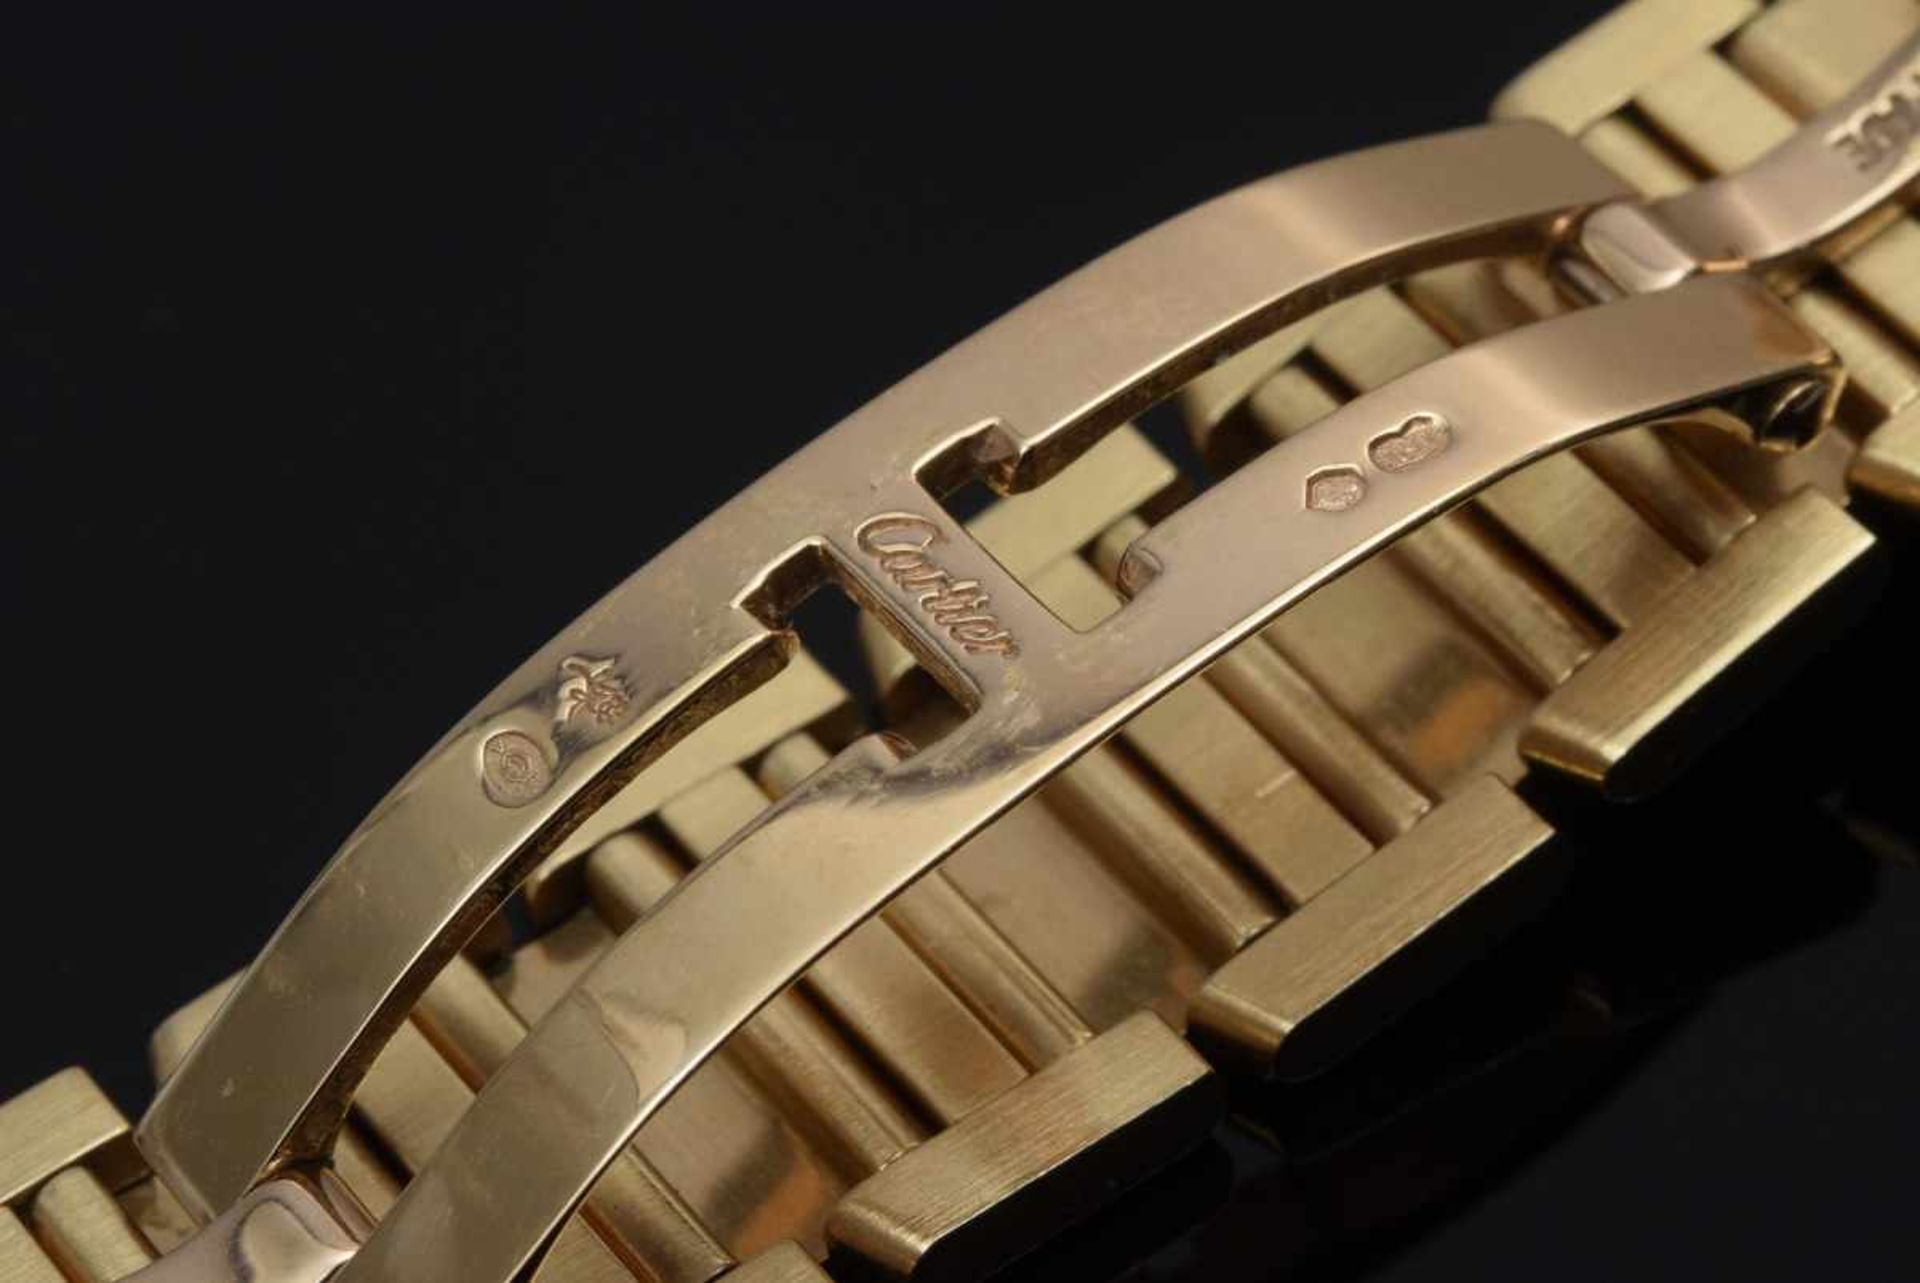 GG 750 Cartier "Tank Française" ladies' watch, quartz movement, dial with roman numerals, - Image 4 of 6